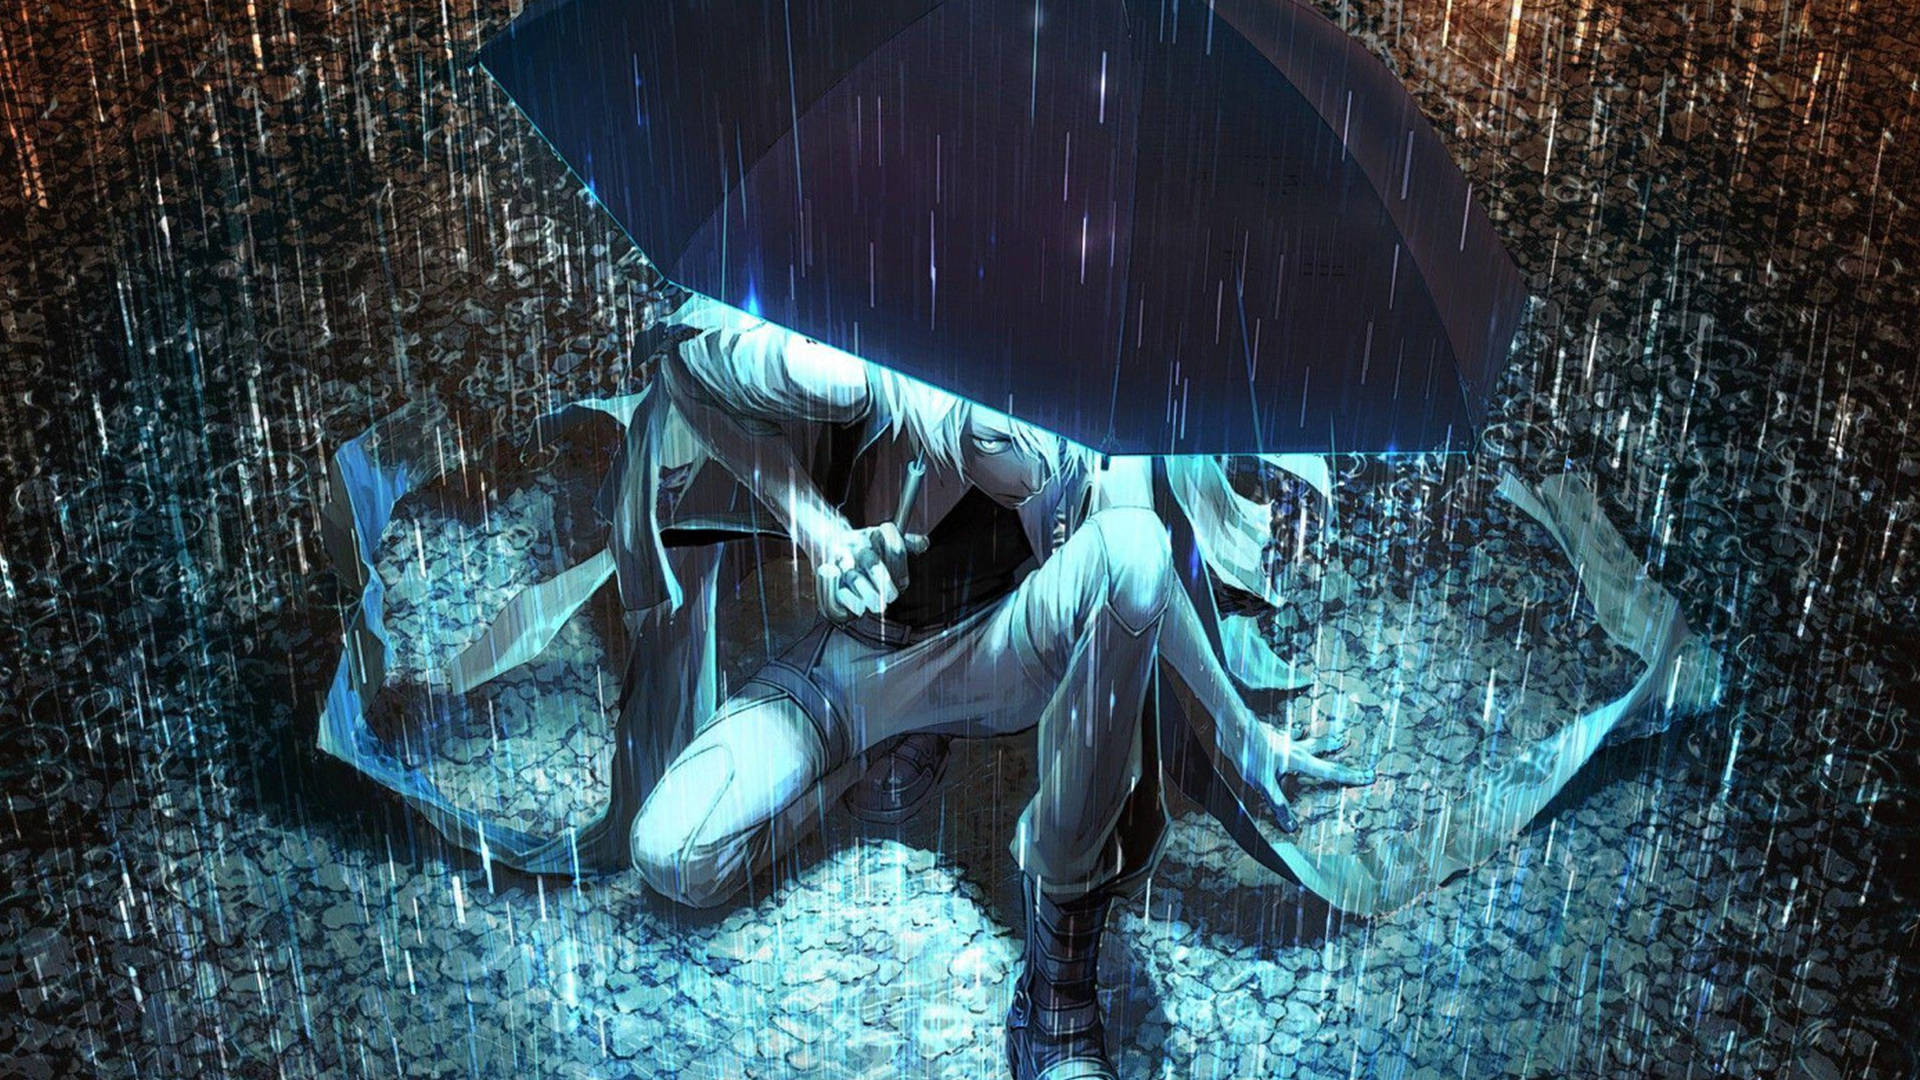 Sad Anime 4k On The Ground With Umbrella Wallpaper